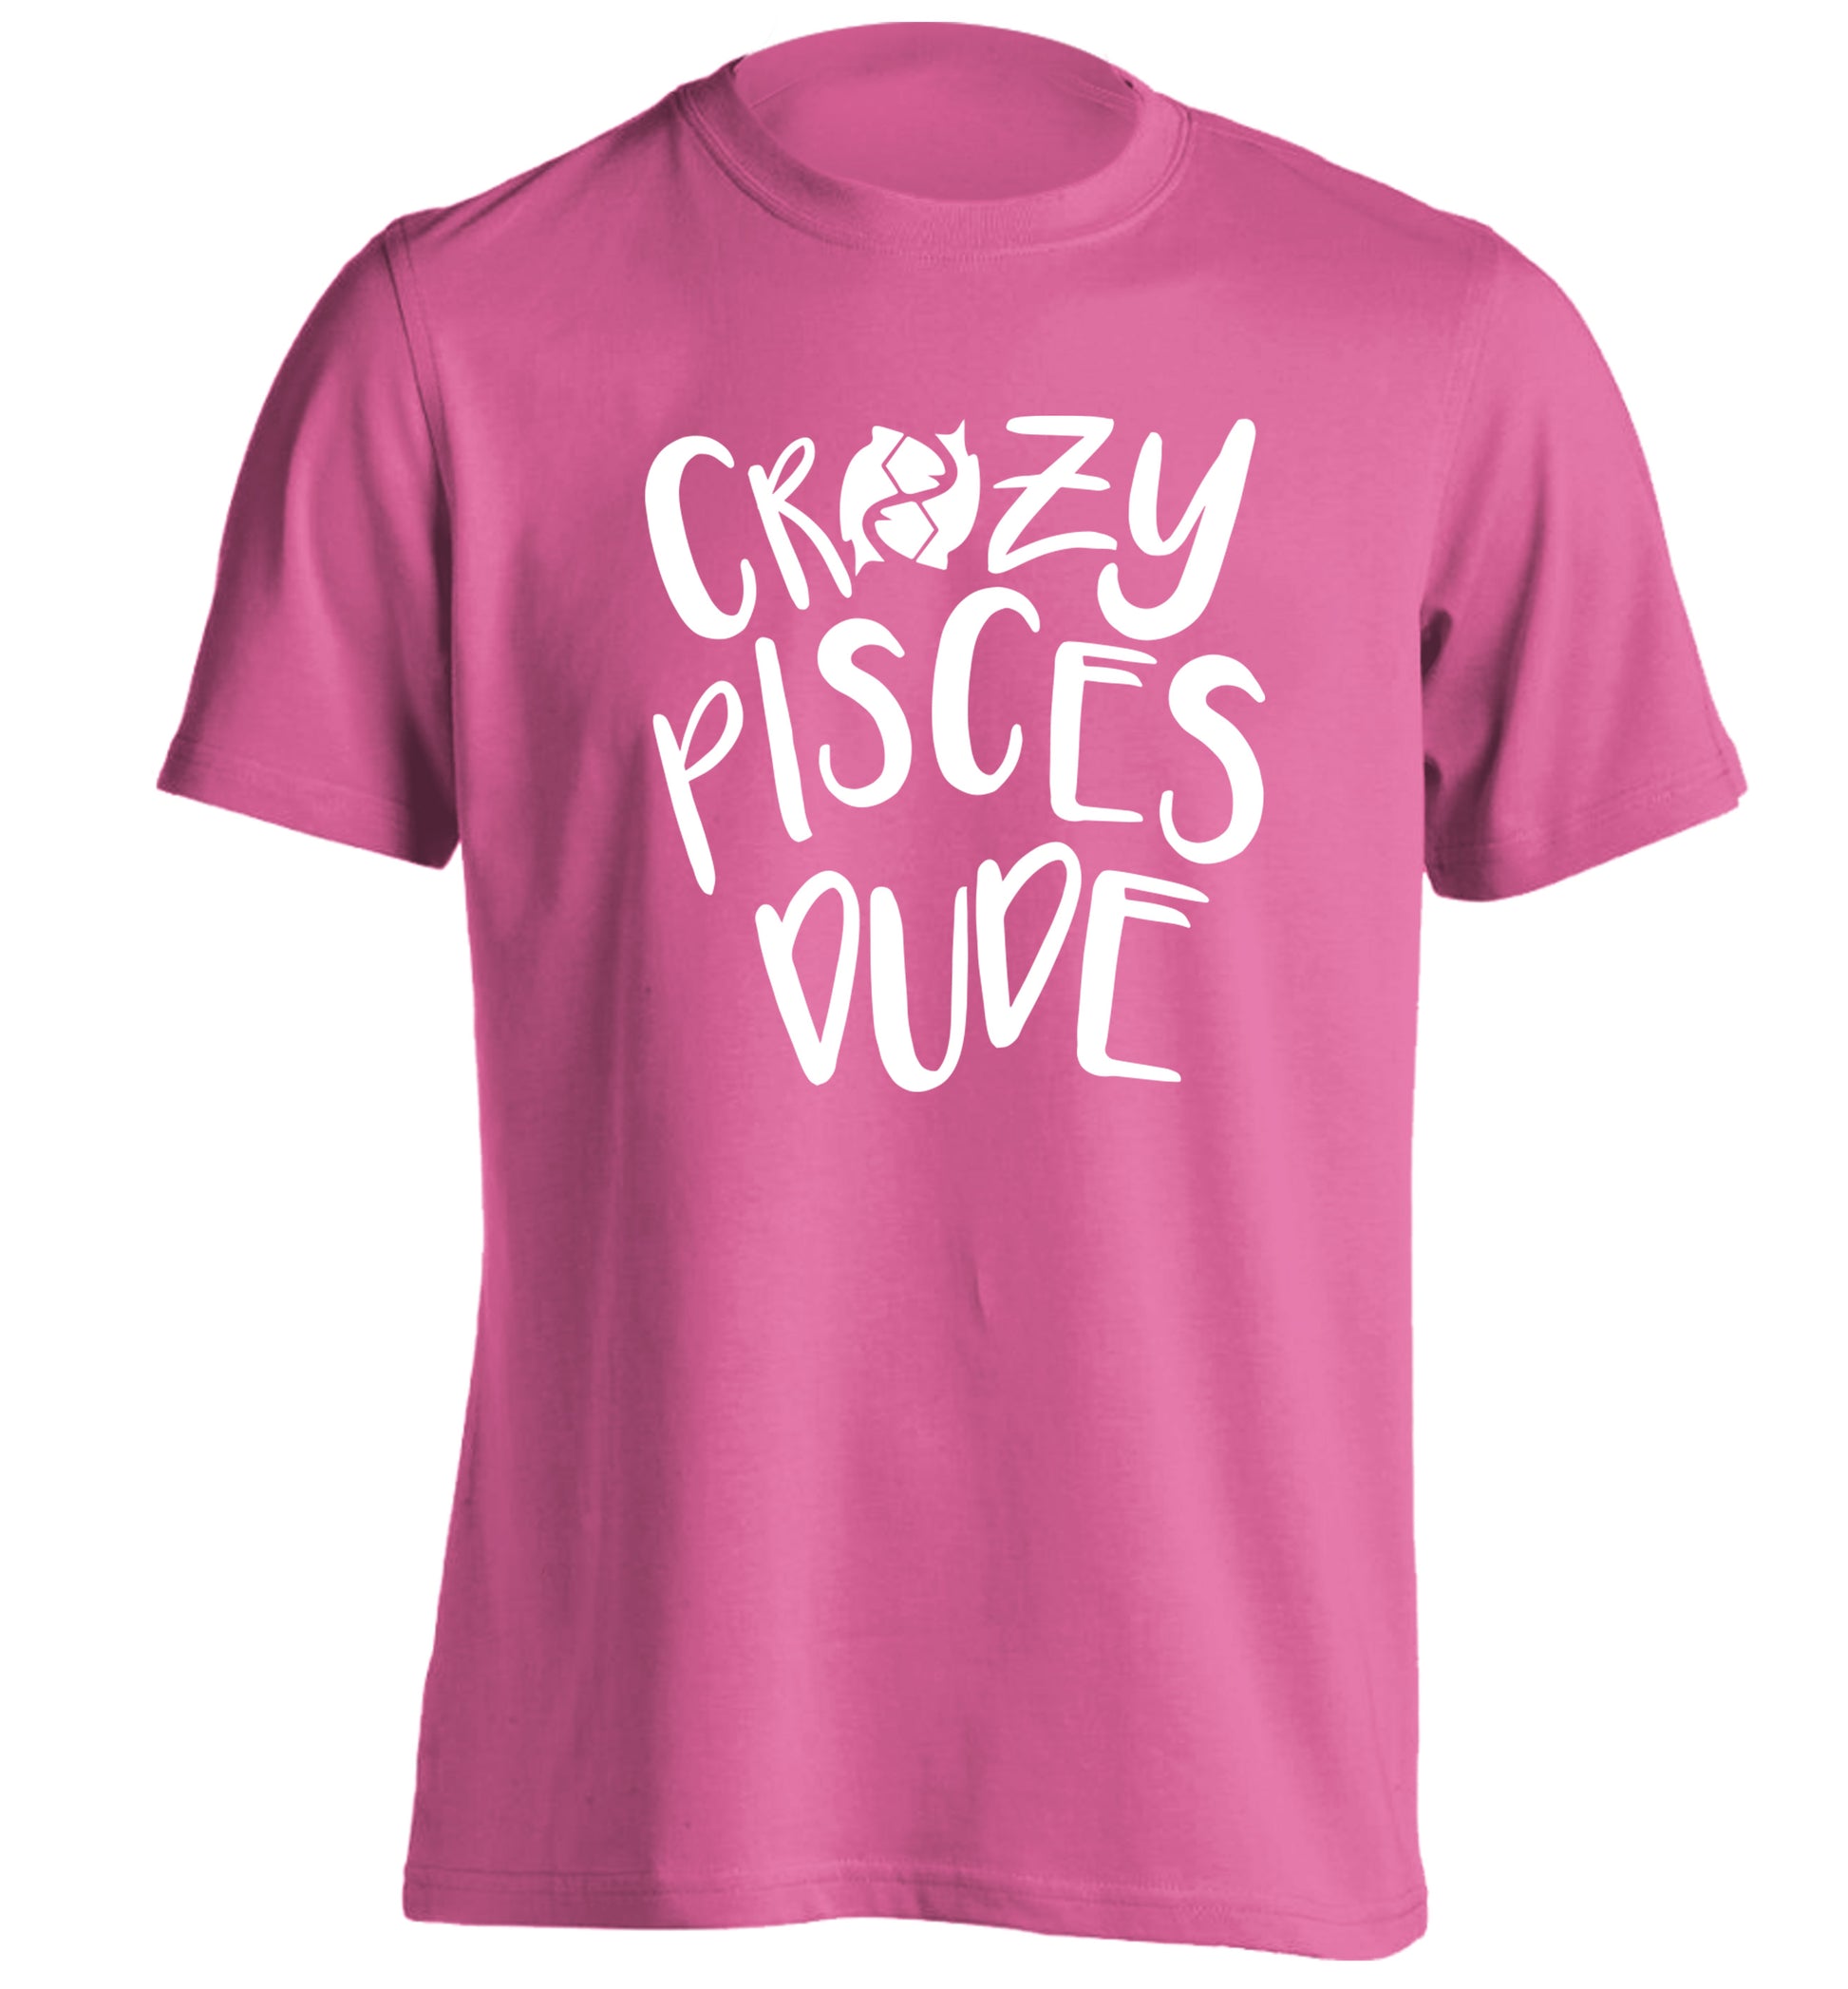 Crazy pisces dude adults unisex pink Tshirt 2XL